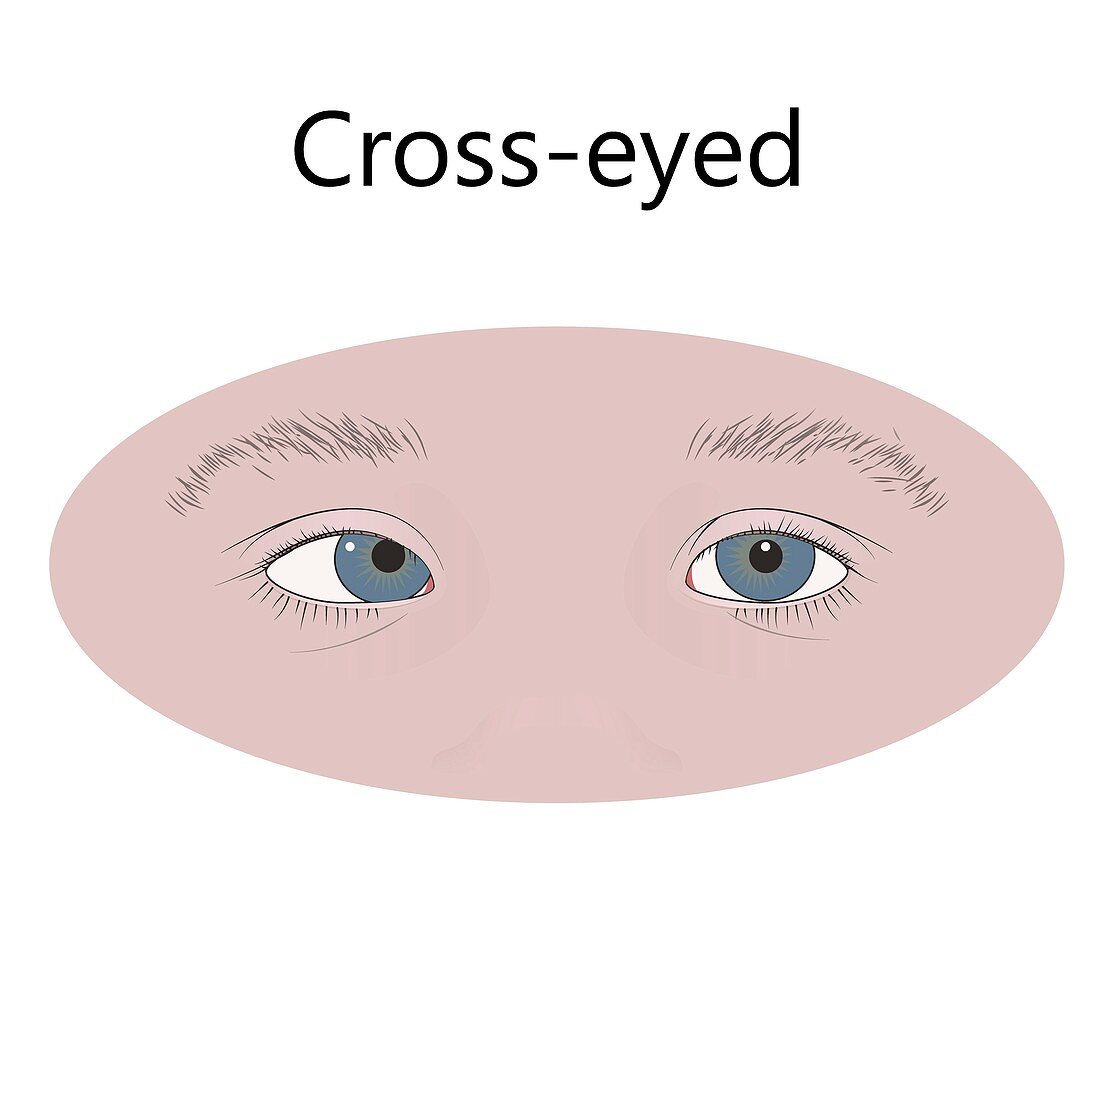 Cross-eyed child, illustration